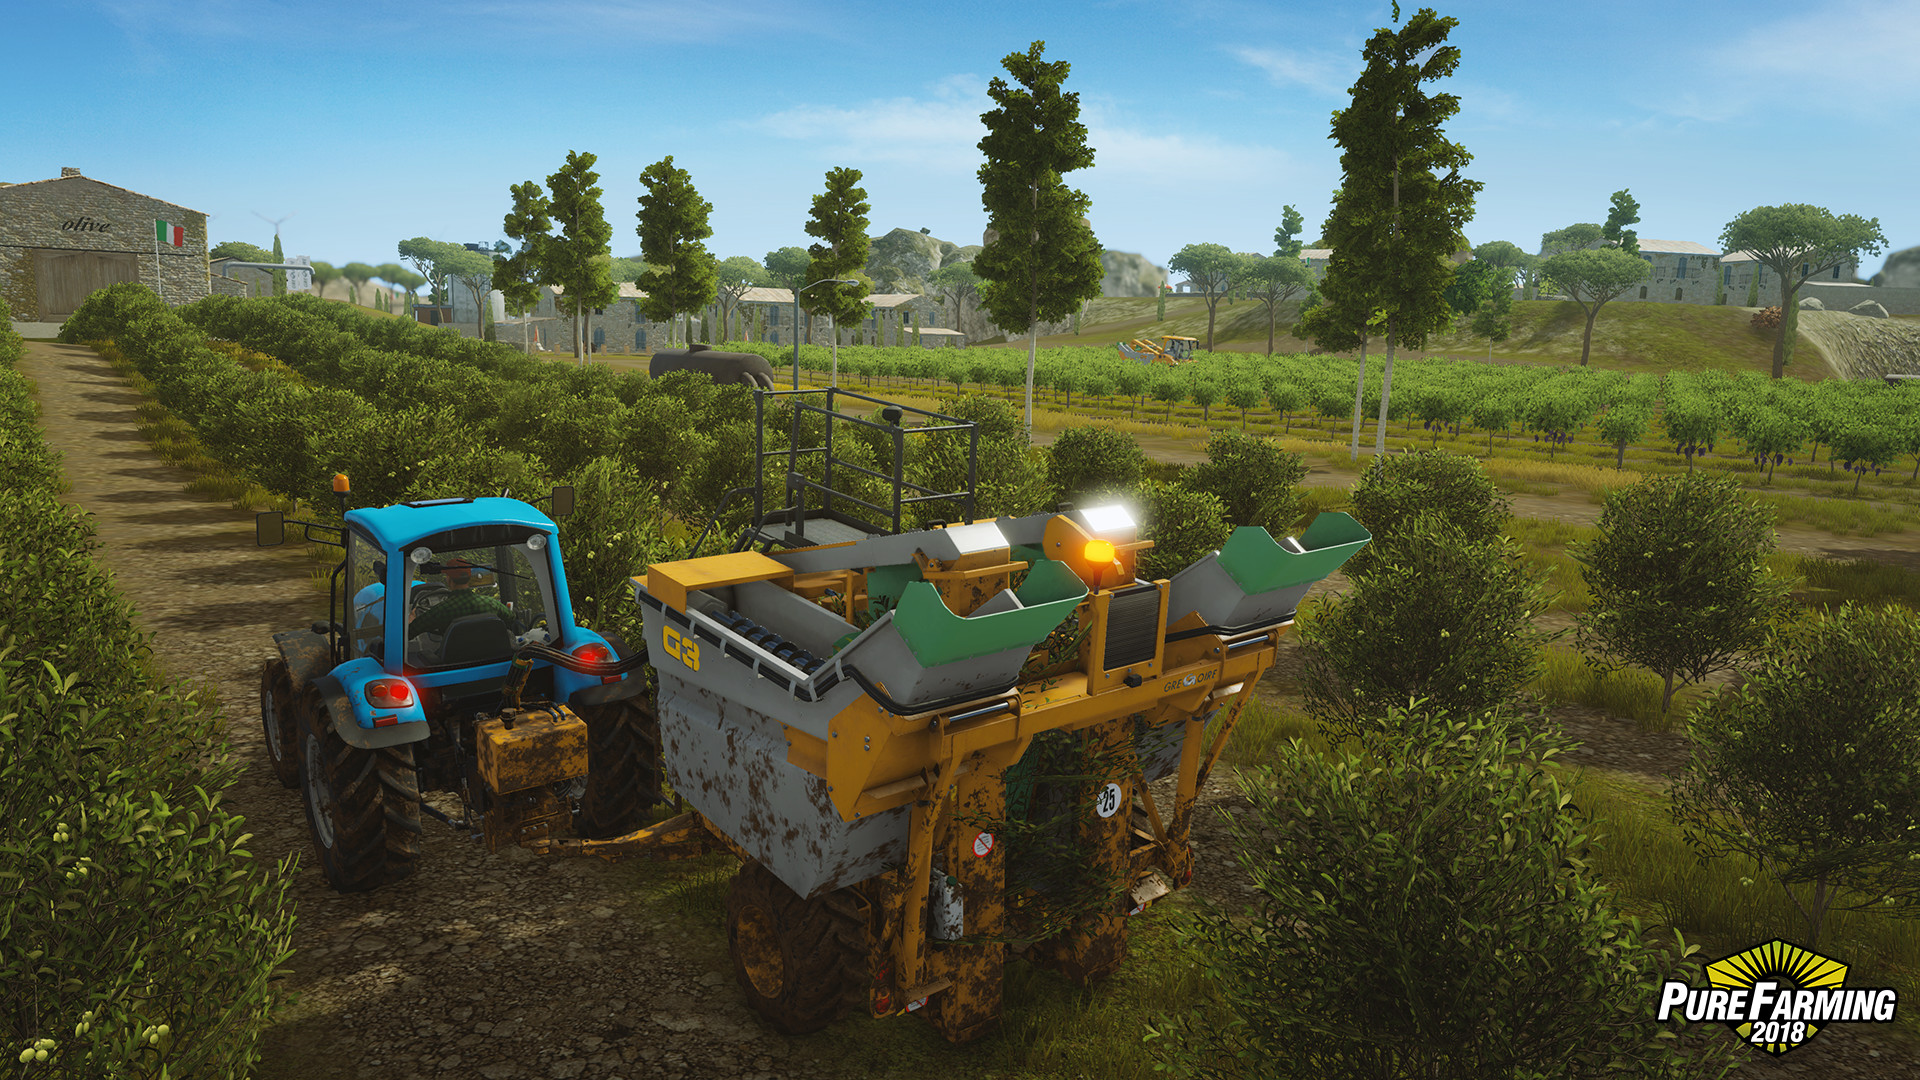 Pure Farming 2018 on Steam